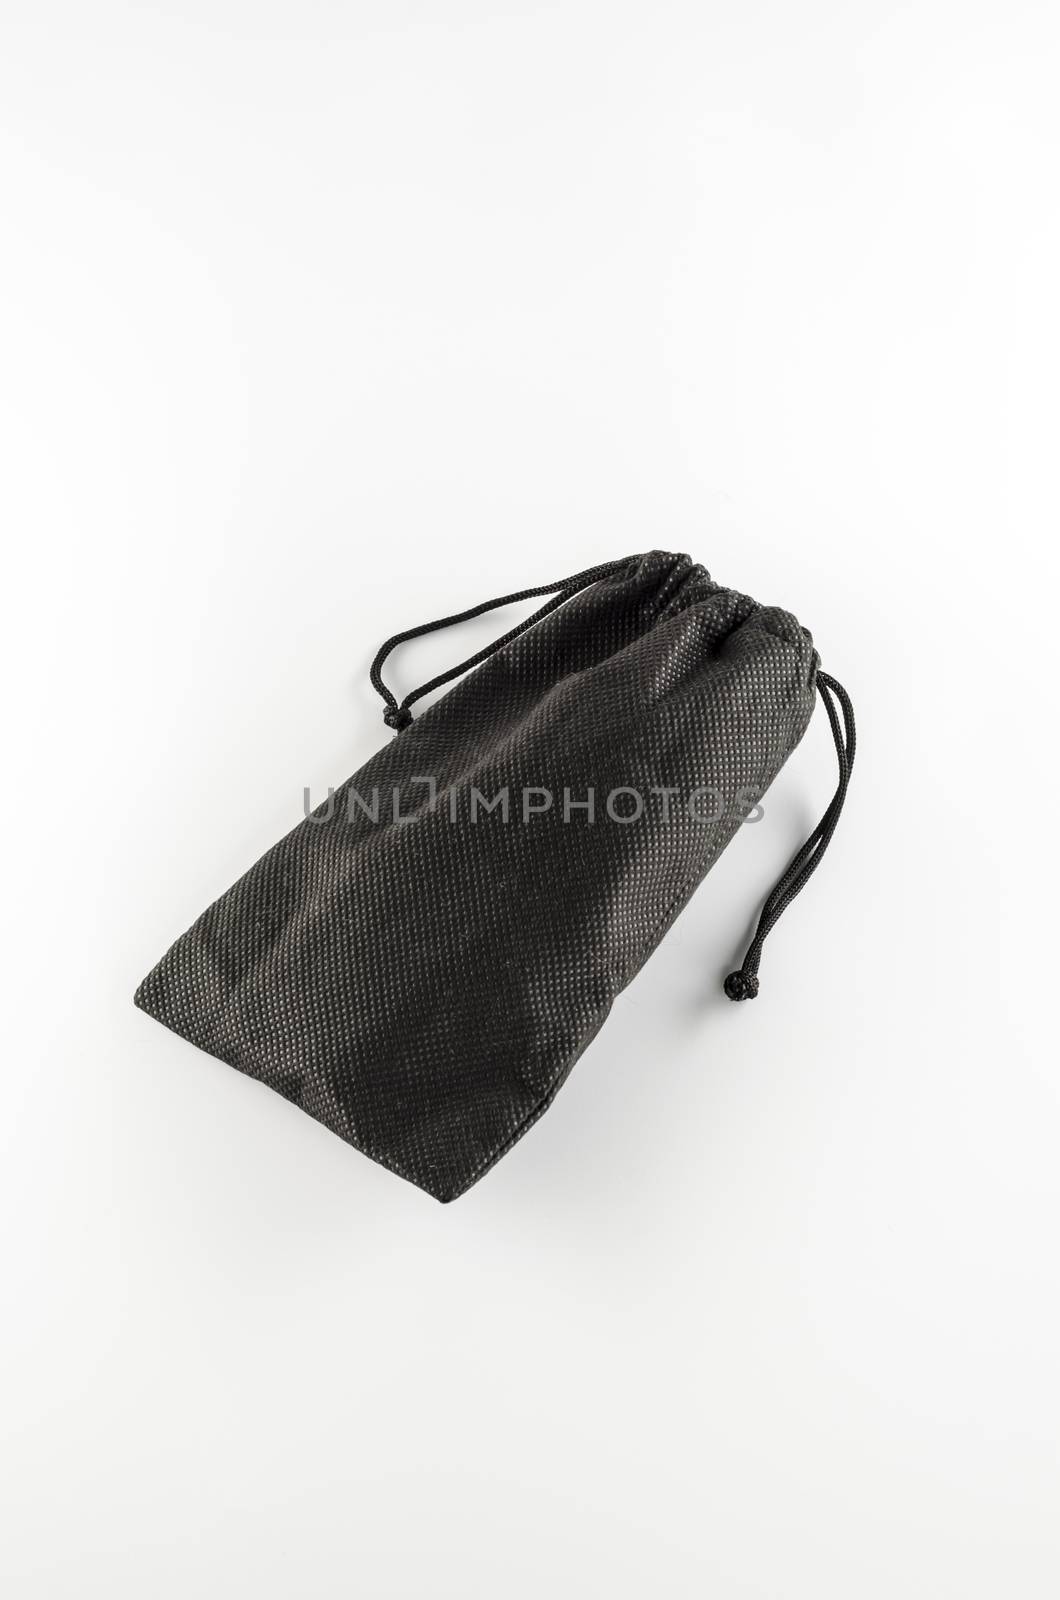 black color bag by ammza12